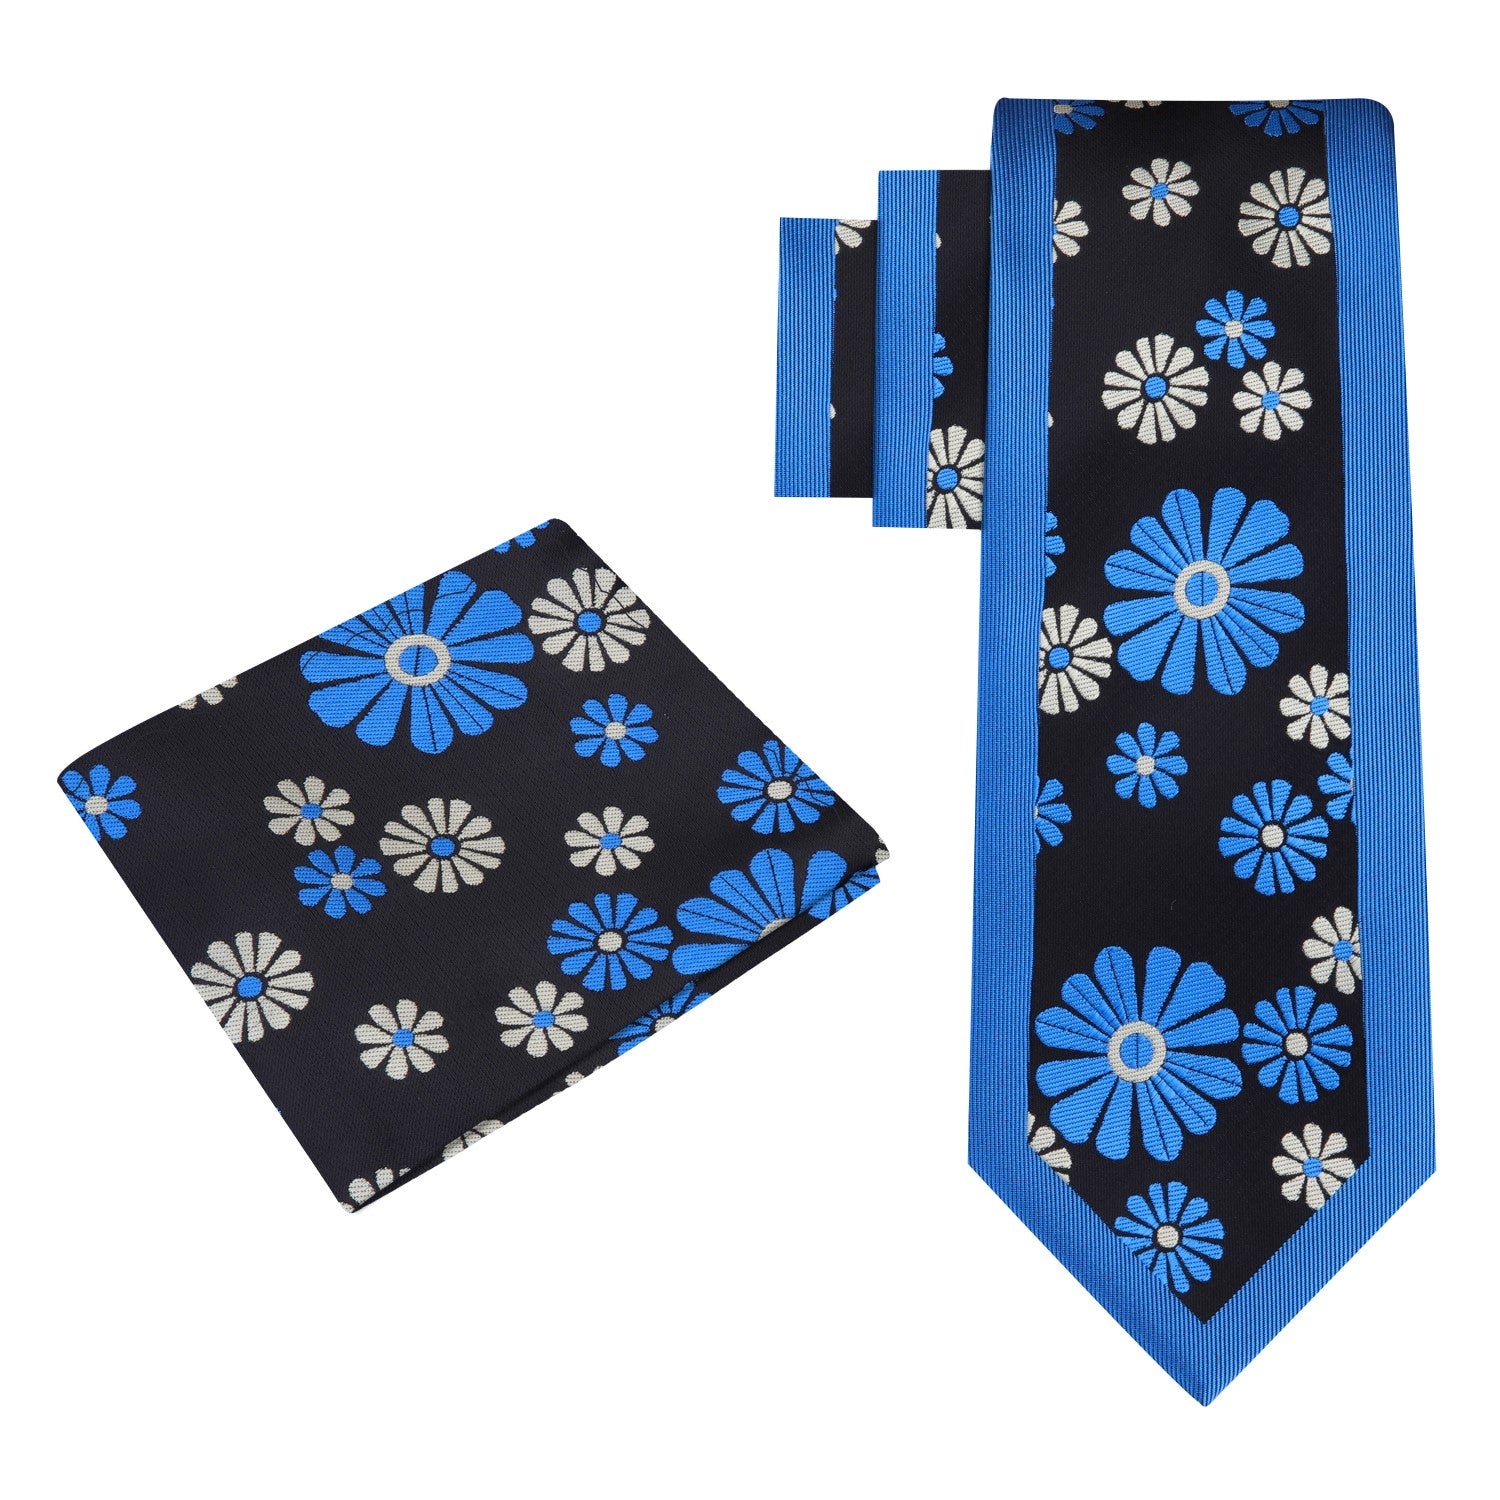 Alt View: Light Blue and Black Cactus Flower Tie and Pocket Square